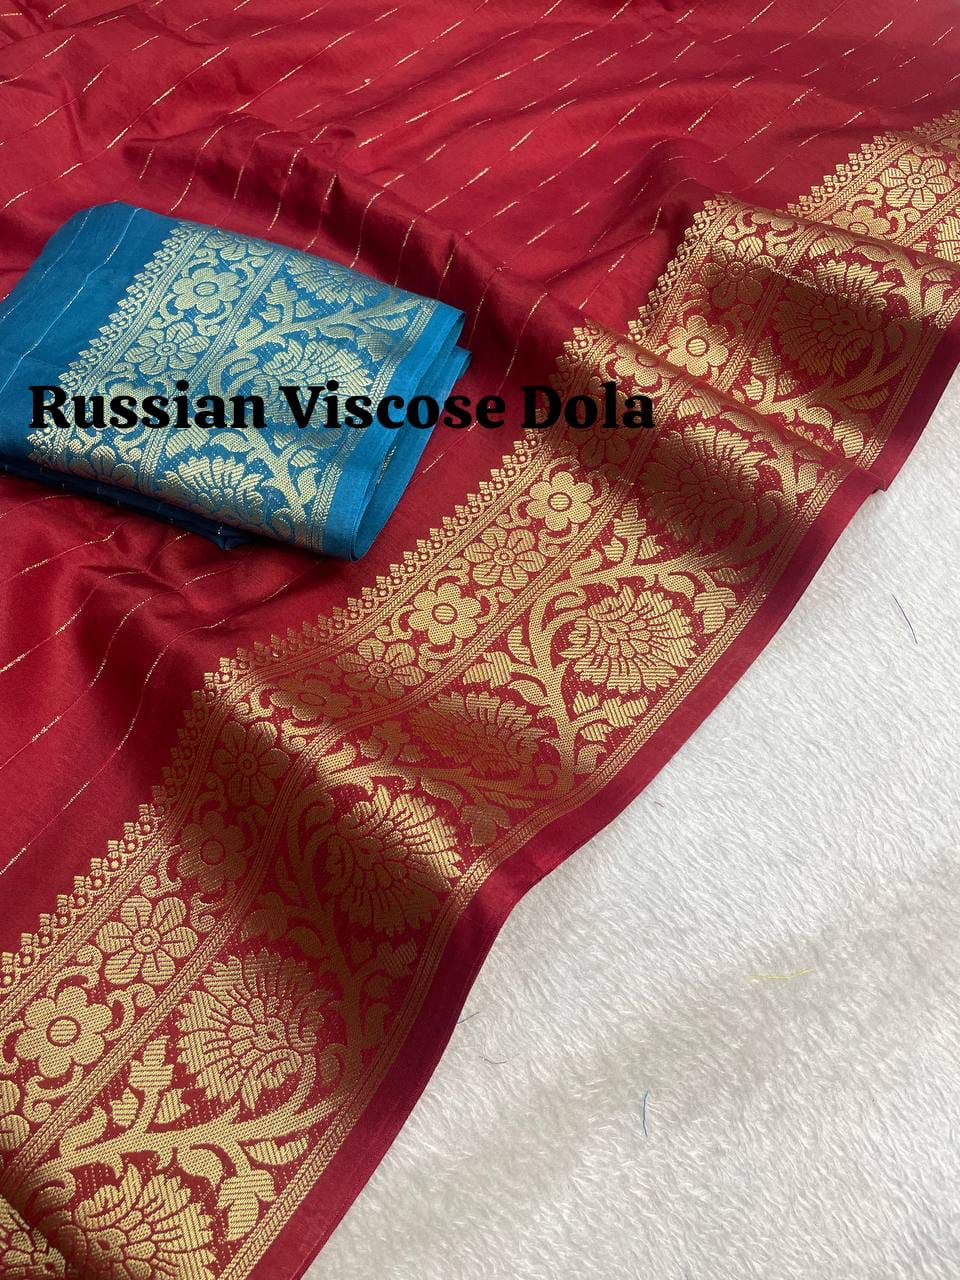 Pure Red Viscose Russian Dola Saree With Pallu And Jacquard Border